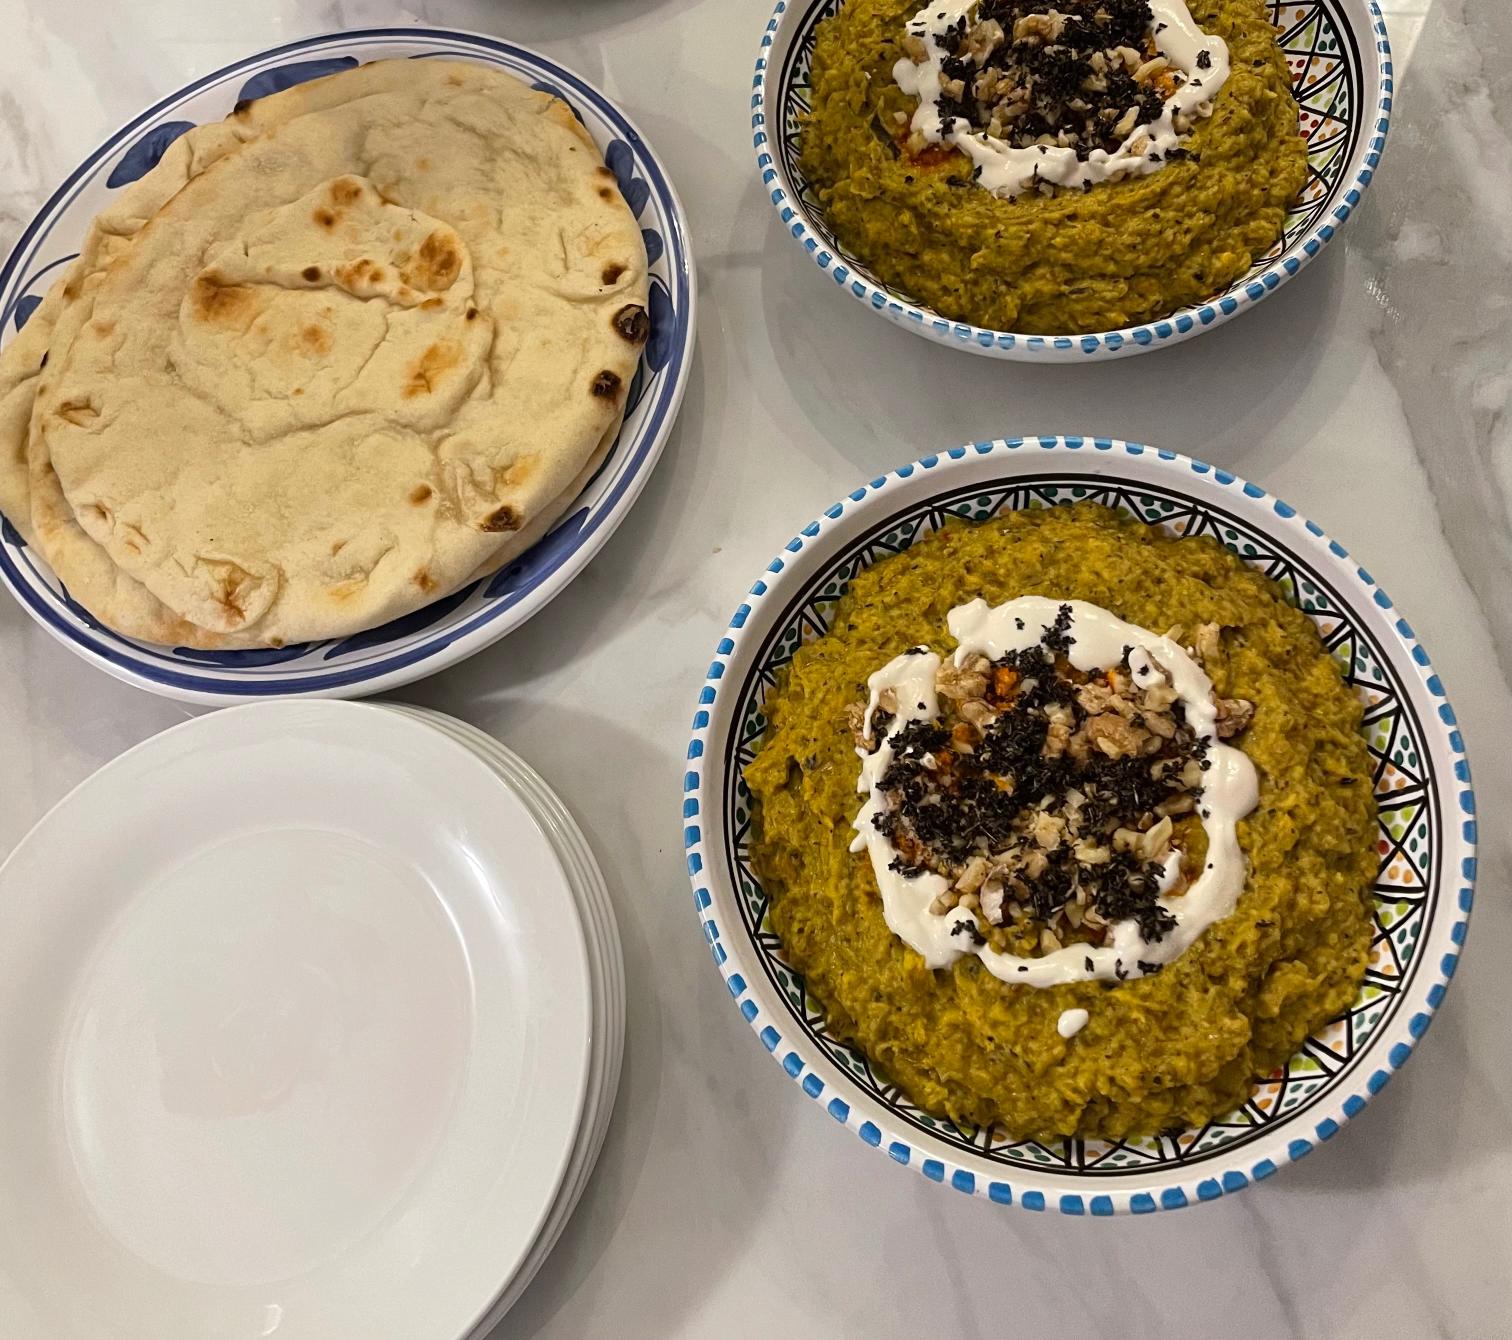 My German mum makes my Iranian dad’s favourite dish